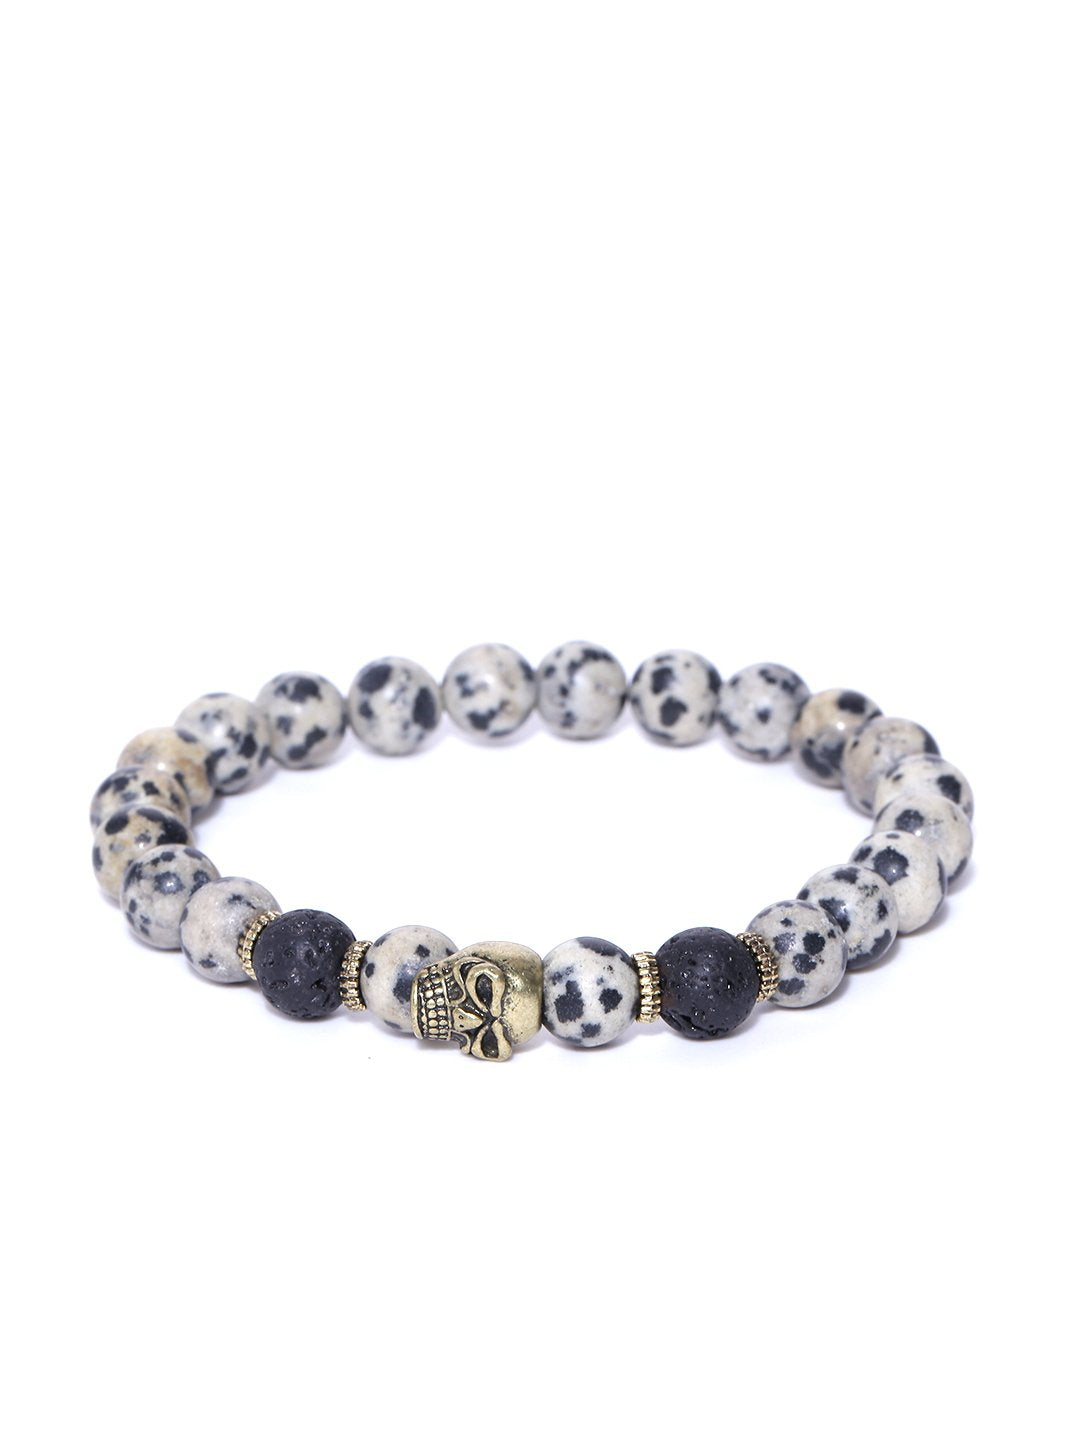 Lazy panda off white and black semi precious natural beads bracelet